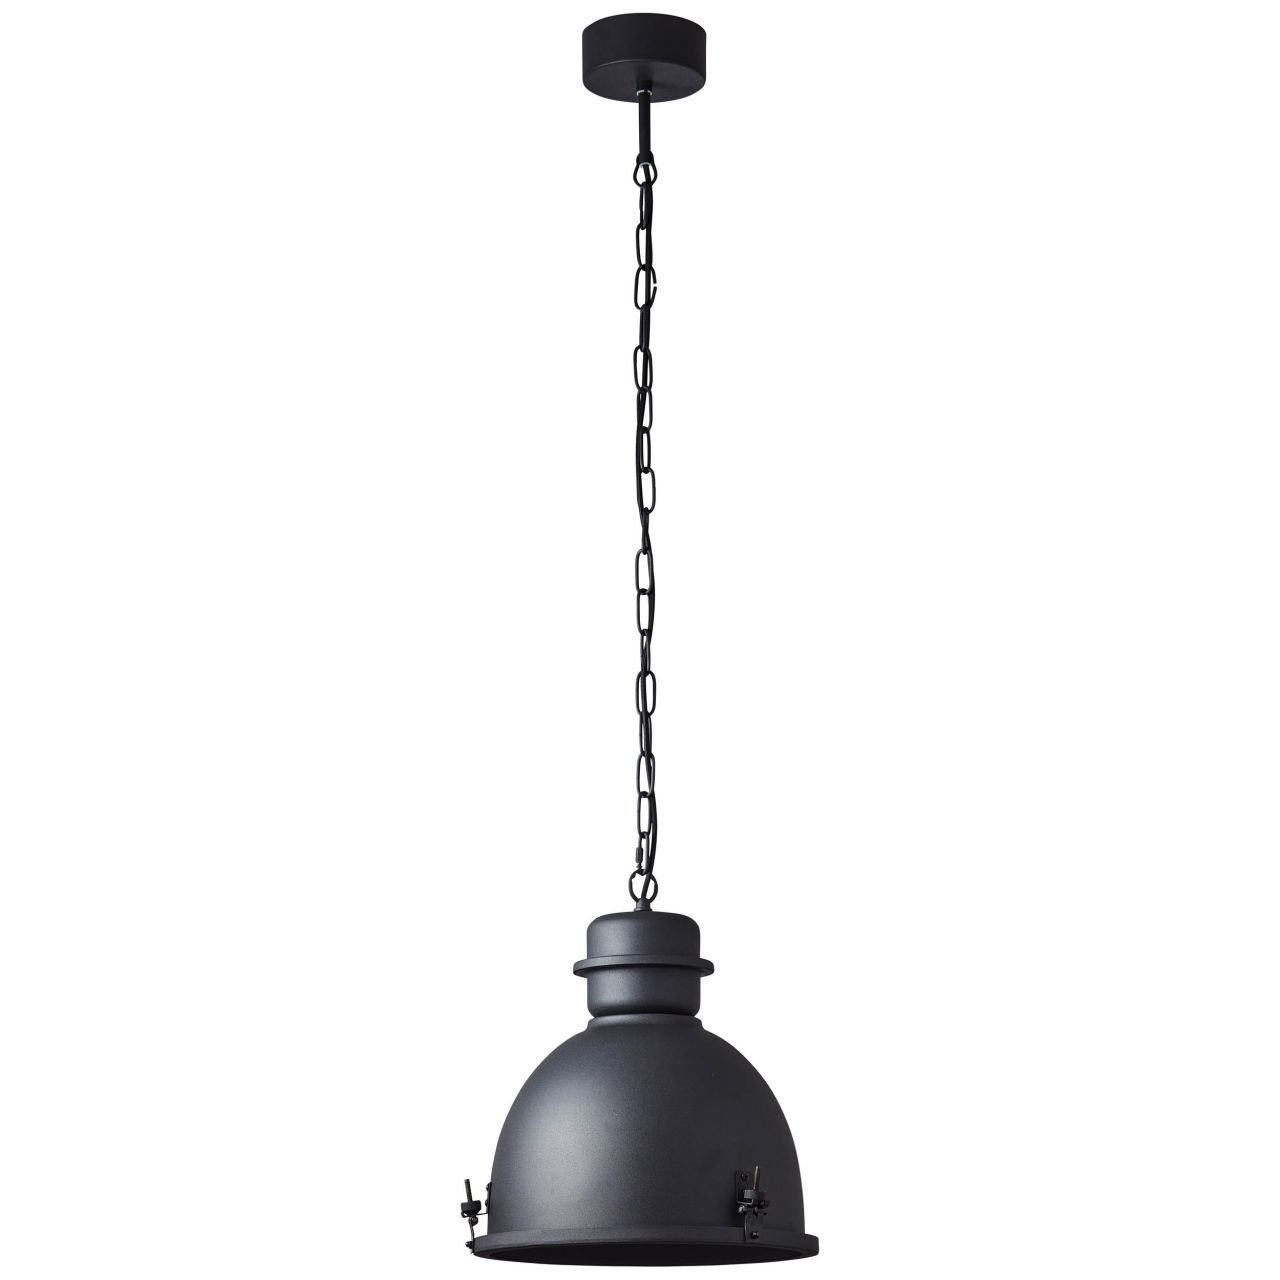 Brilliant Pendelleuchte Kiki, Pendelleuchte 35cm Lampe, schwarz Metall, A60, 1x 52 Kiki E27, korund